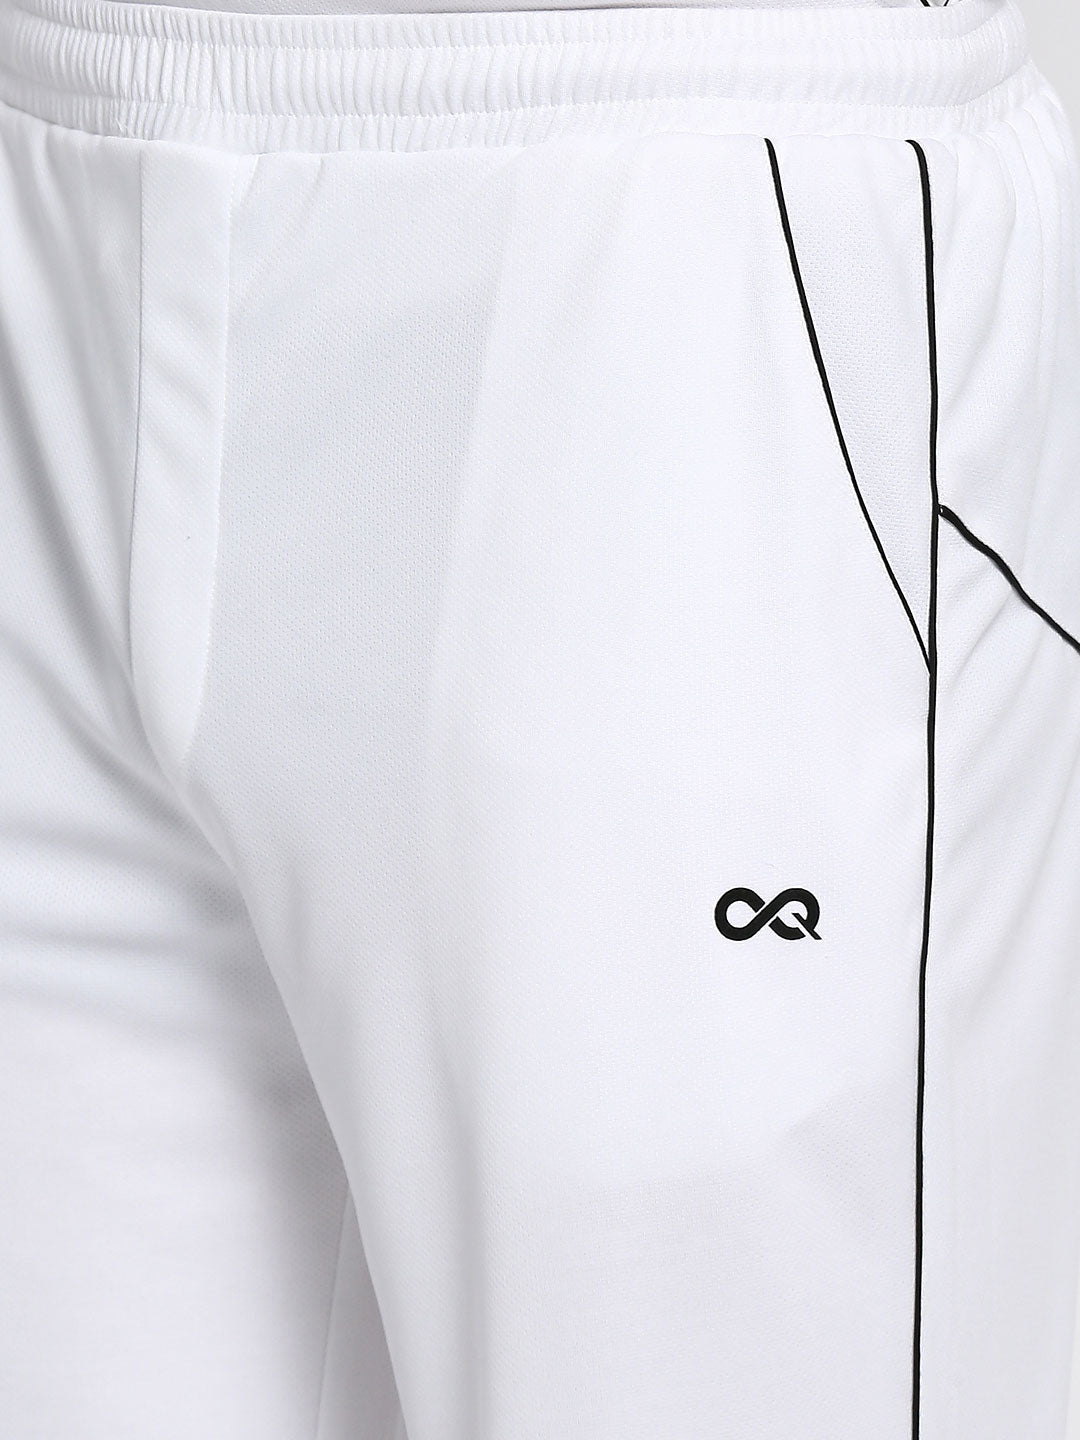 SG Professional Cricket Trouser WhiteBlue Pocket Stripe  Large   Amazonin Clothing  Accessories